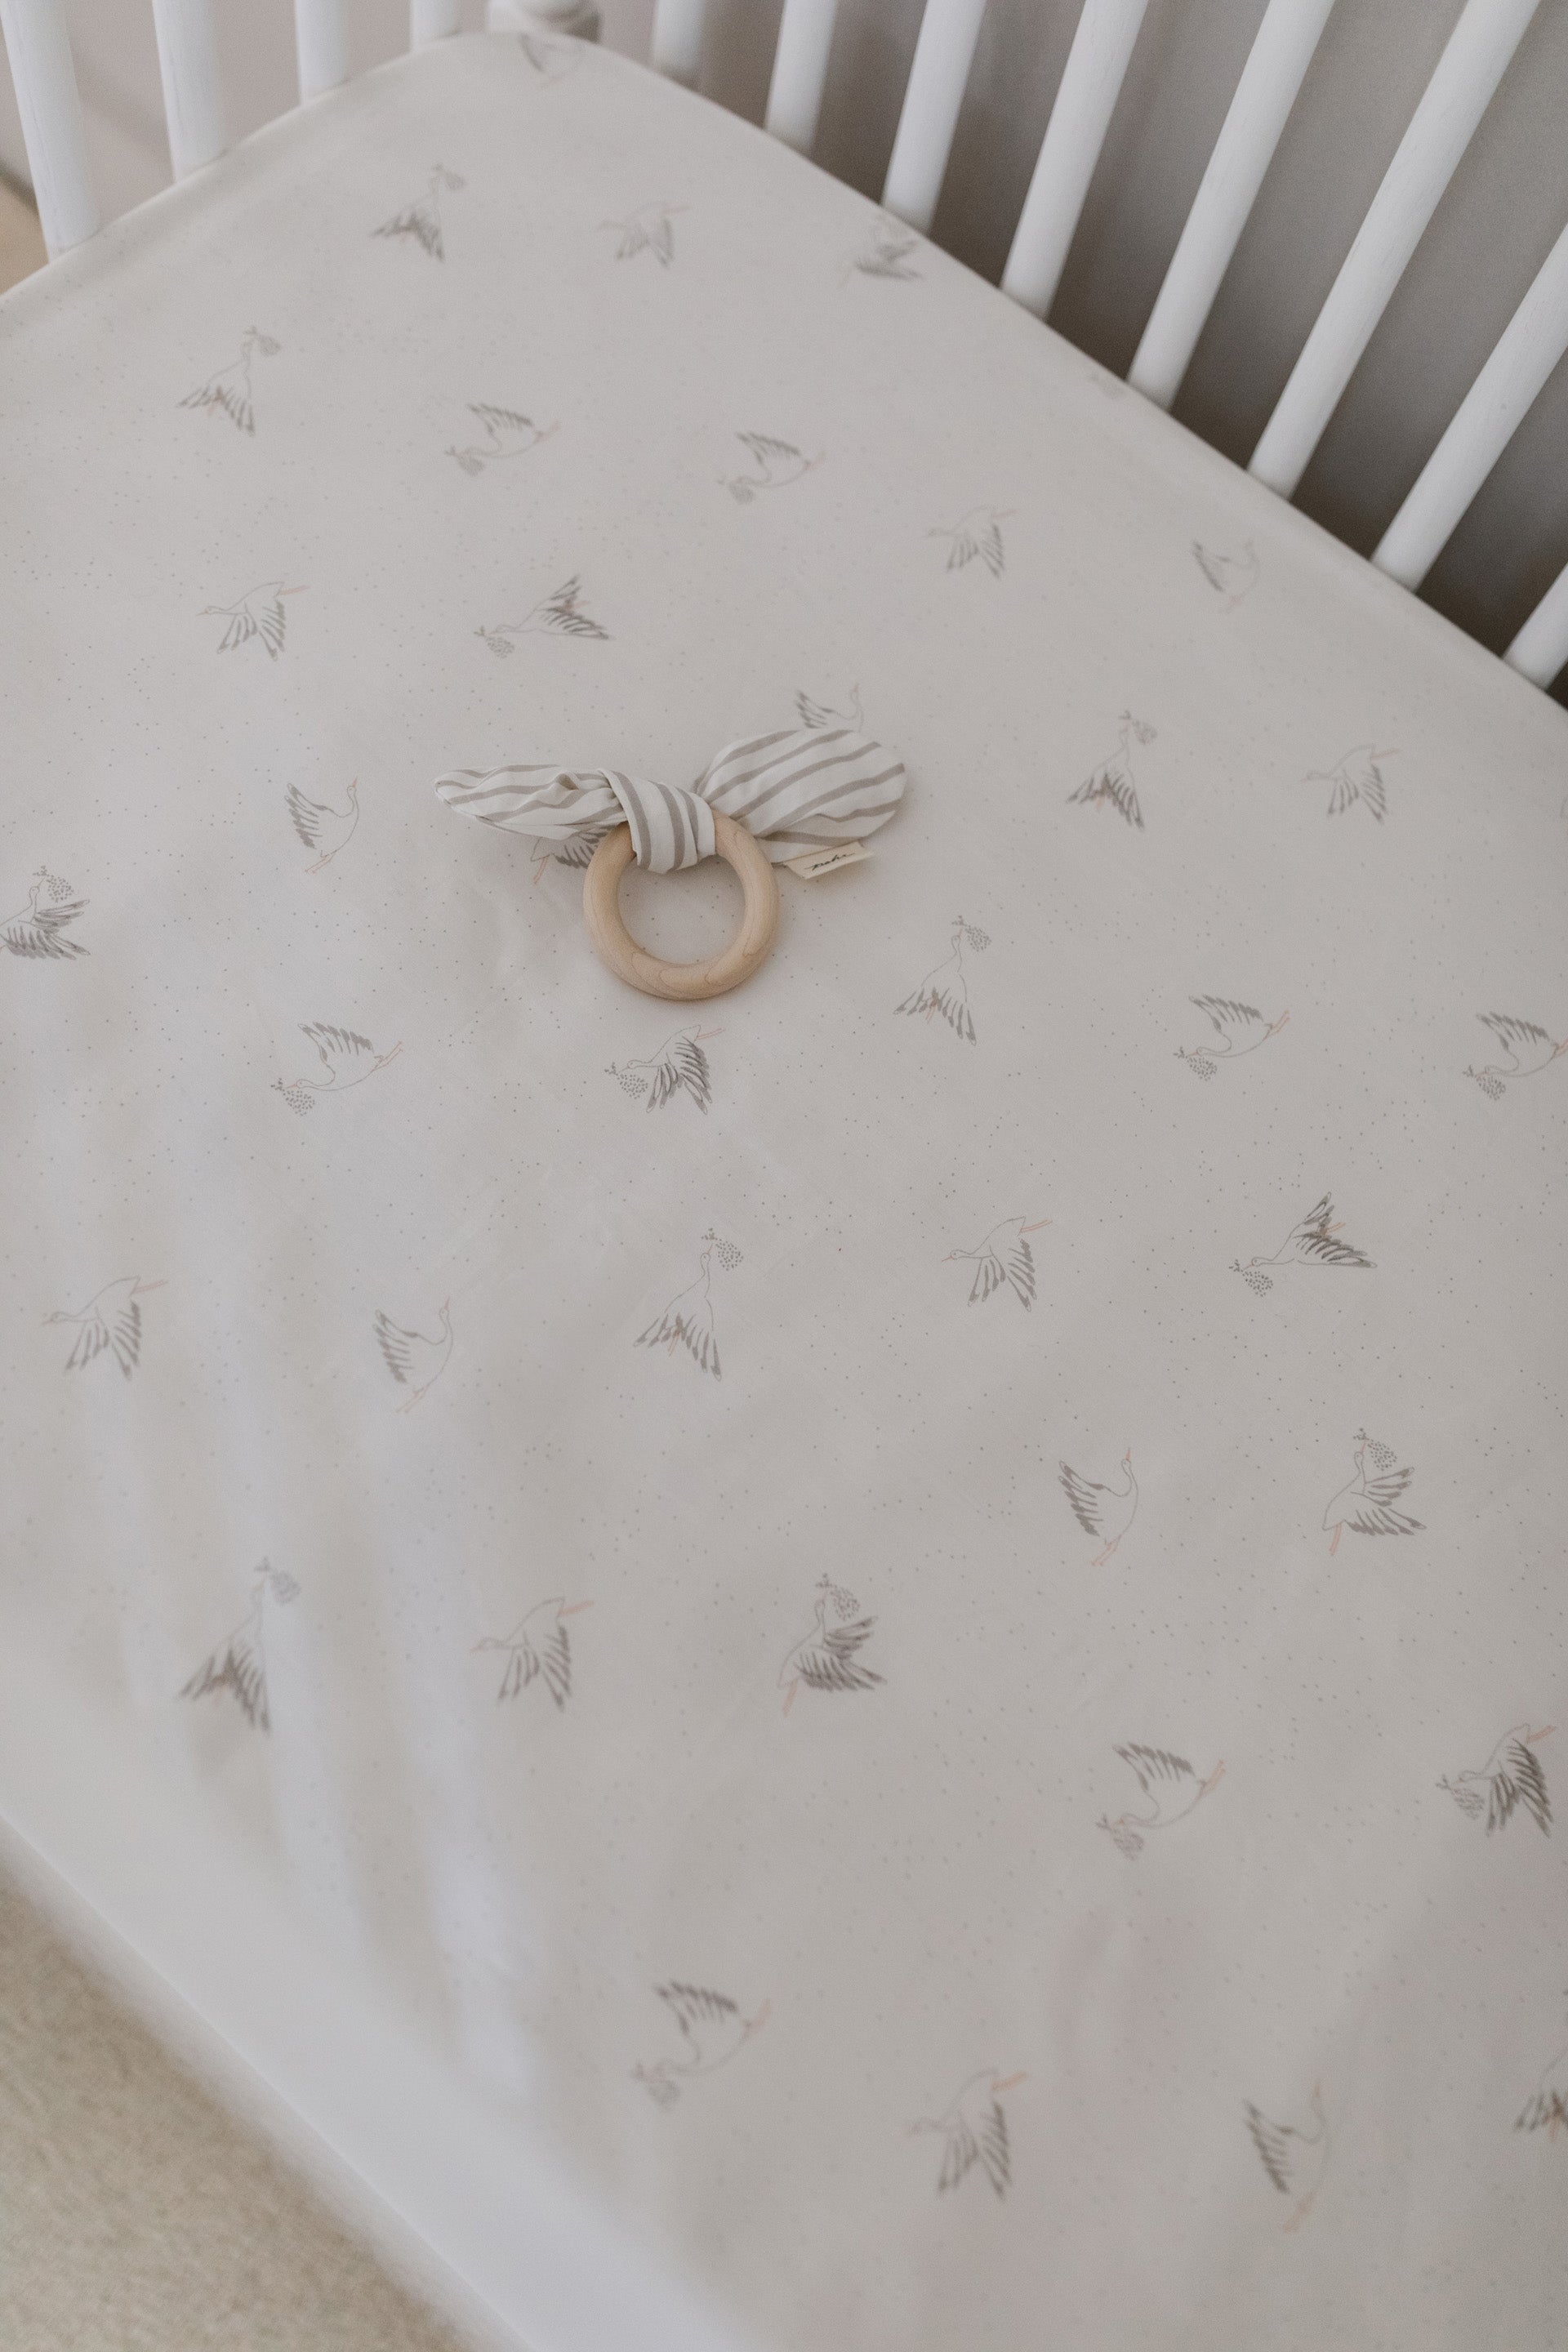 pehr stork surprise crib sheet in baby cot